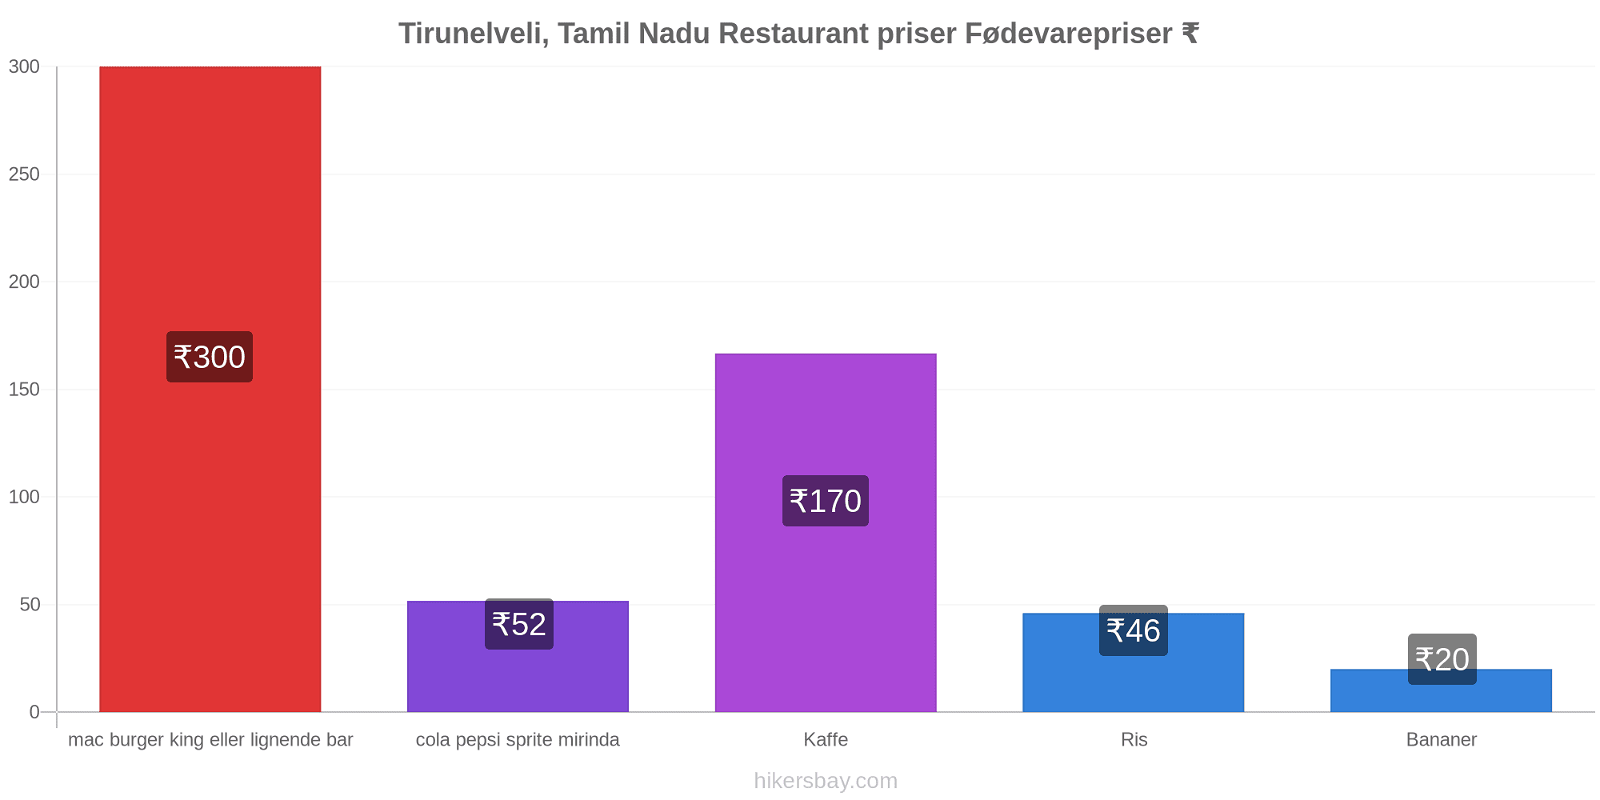 Tirunelveli, Tamil Nadu prisændringer hikersbay.com